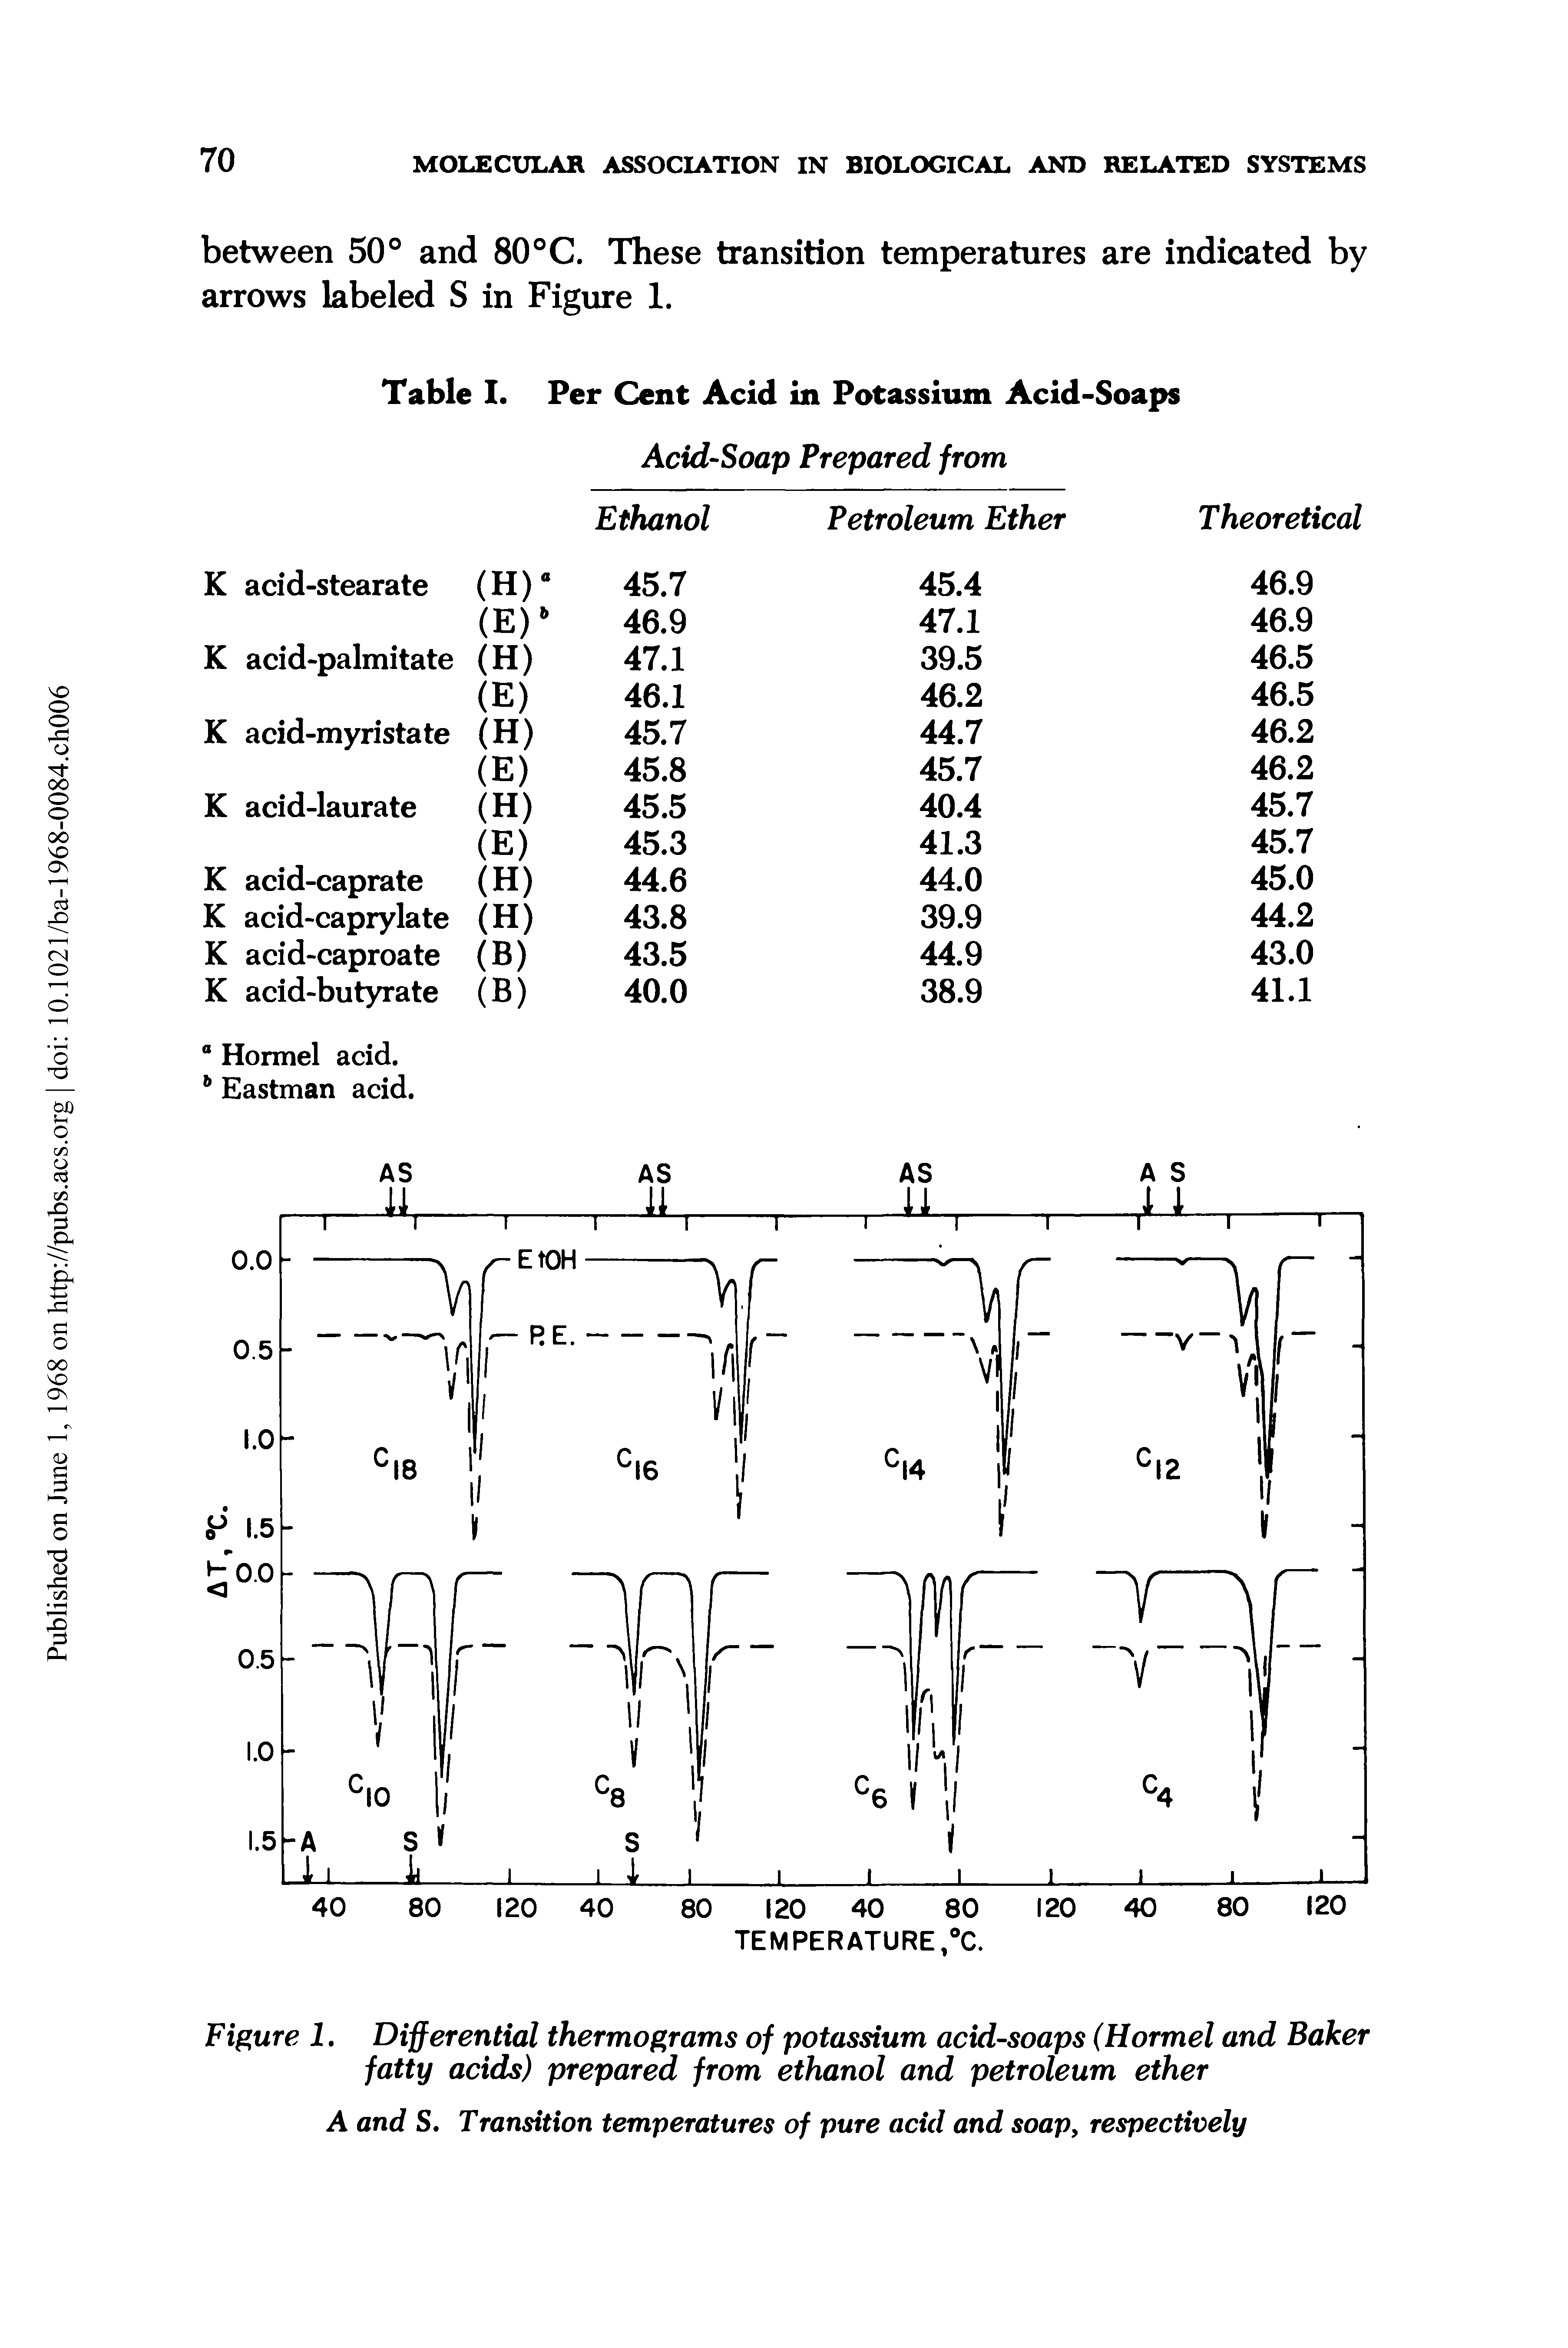 Table I. Per Cent Acid in Potassium Acid-Soaps...